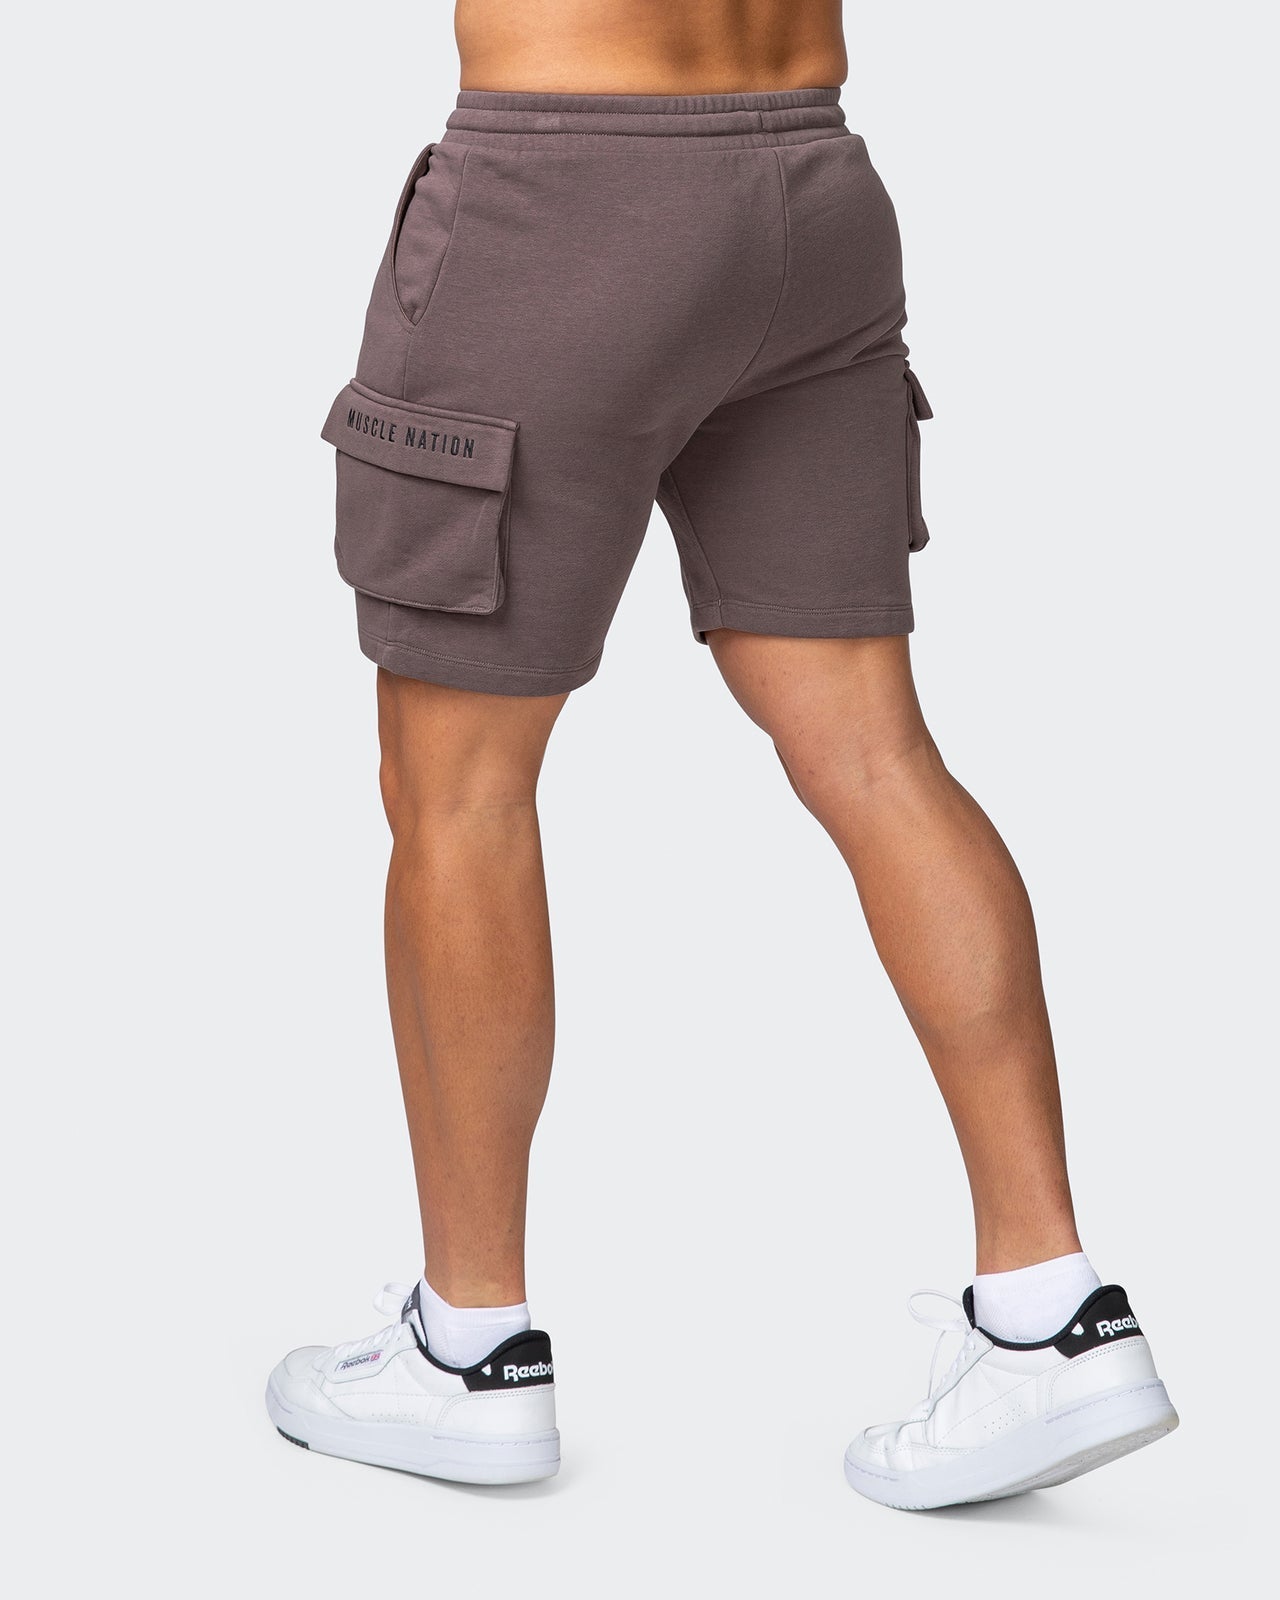 musclenation Activewear Cargo Vintage Shorts - Dark Taupe